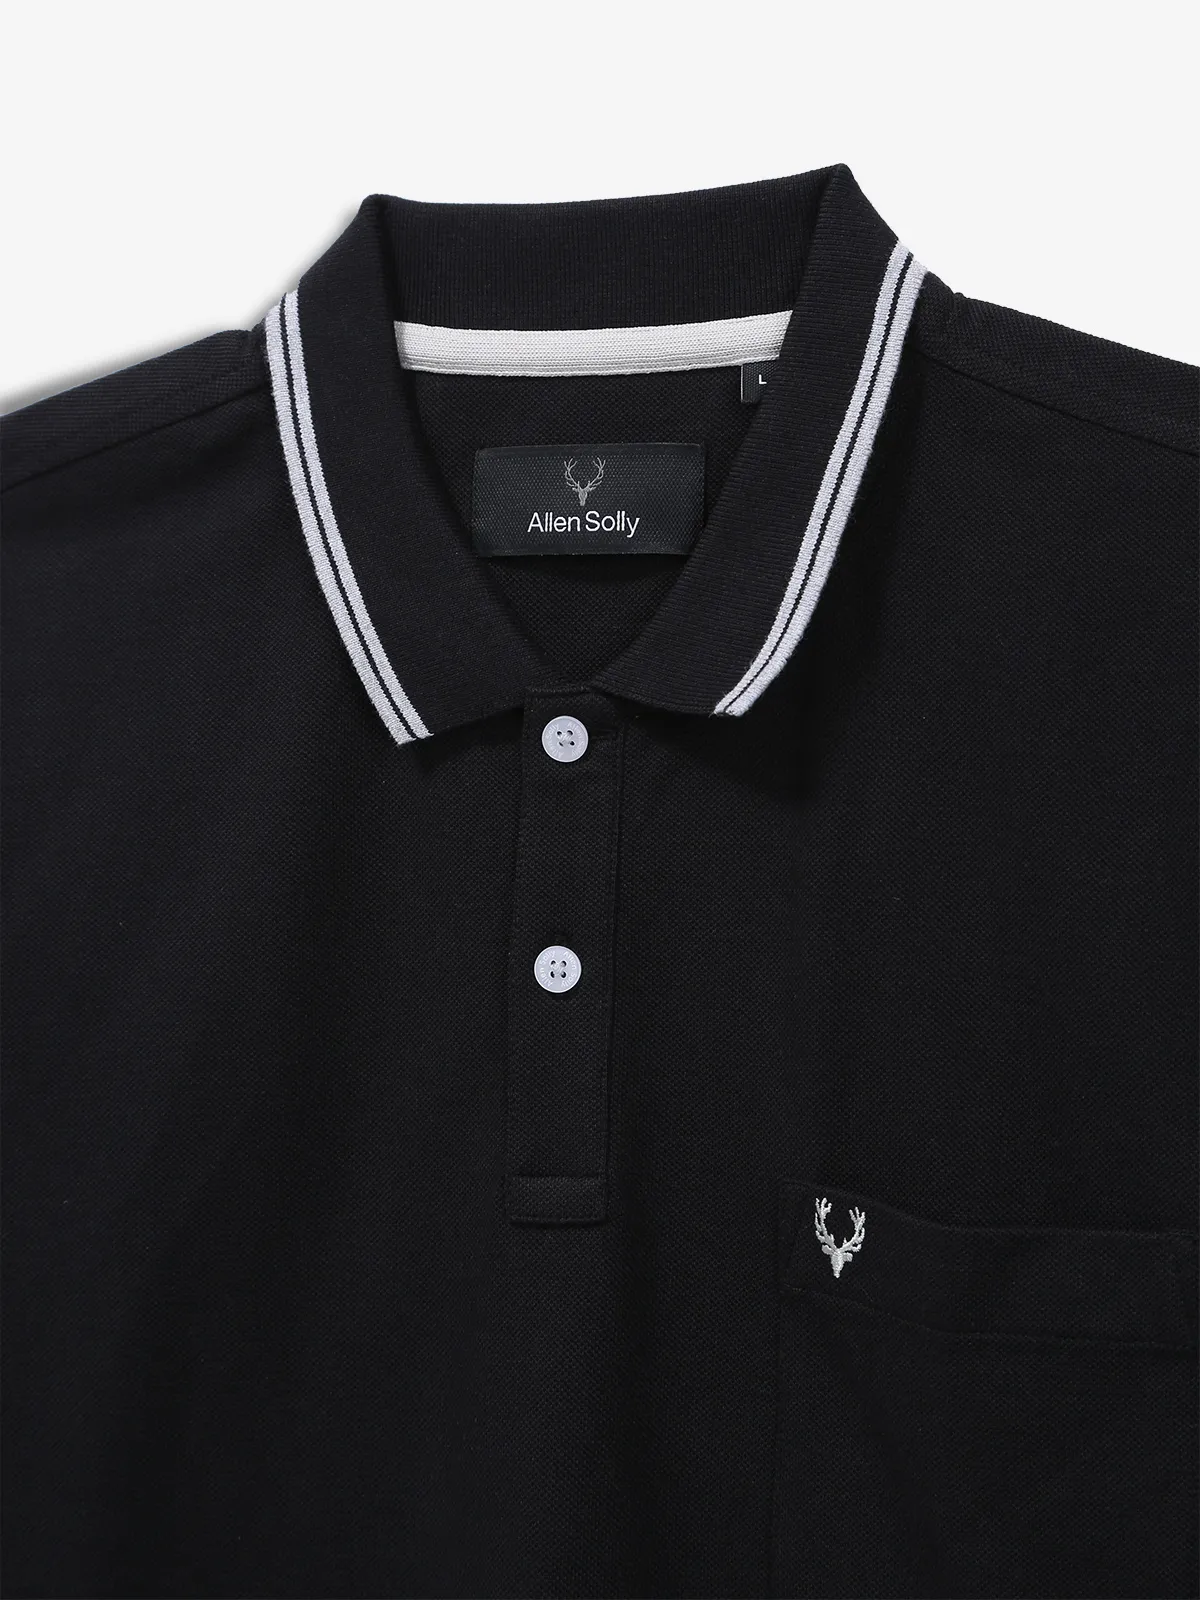 ALLEN SOLLY plain black cotton polo t-shirt